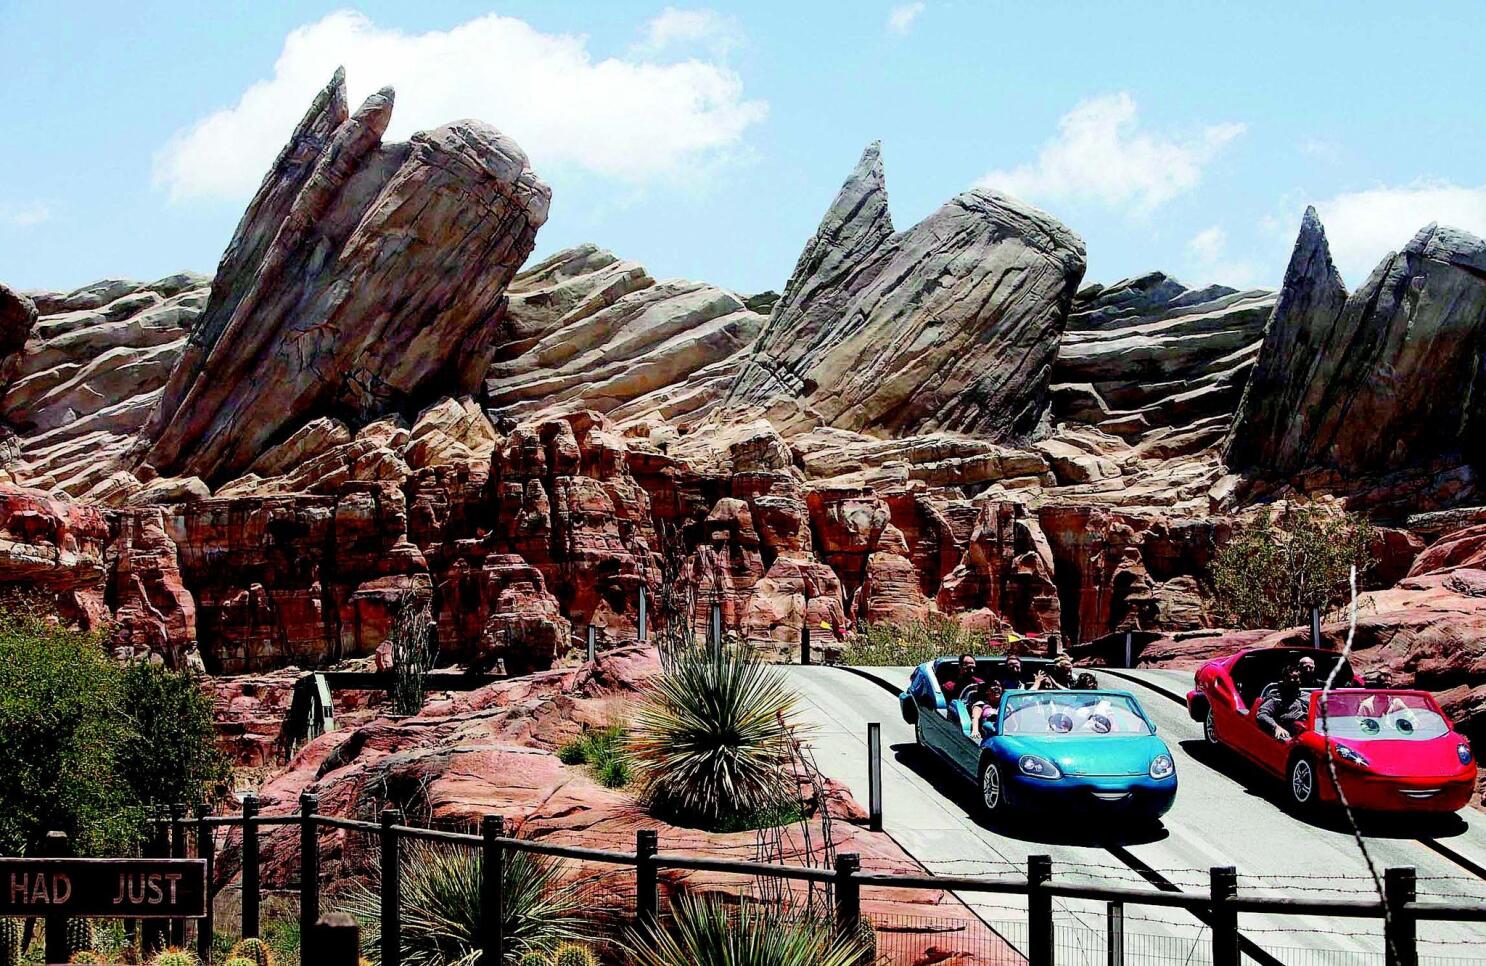 Disney Parks Announces Closure of Popular Pixar 'Cars' Attraction •